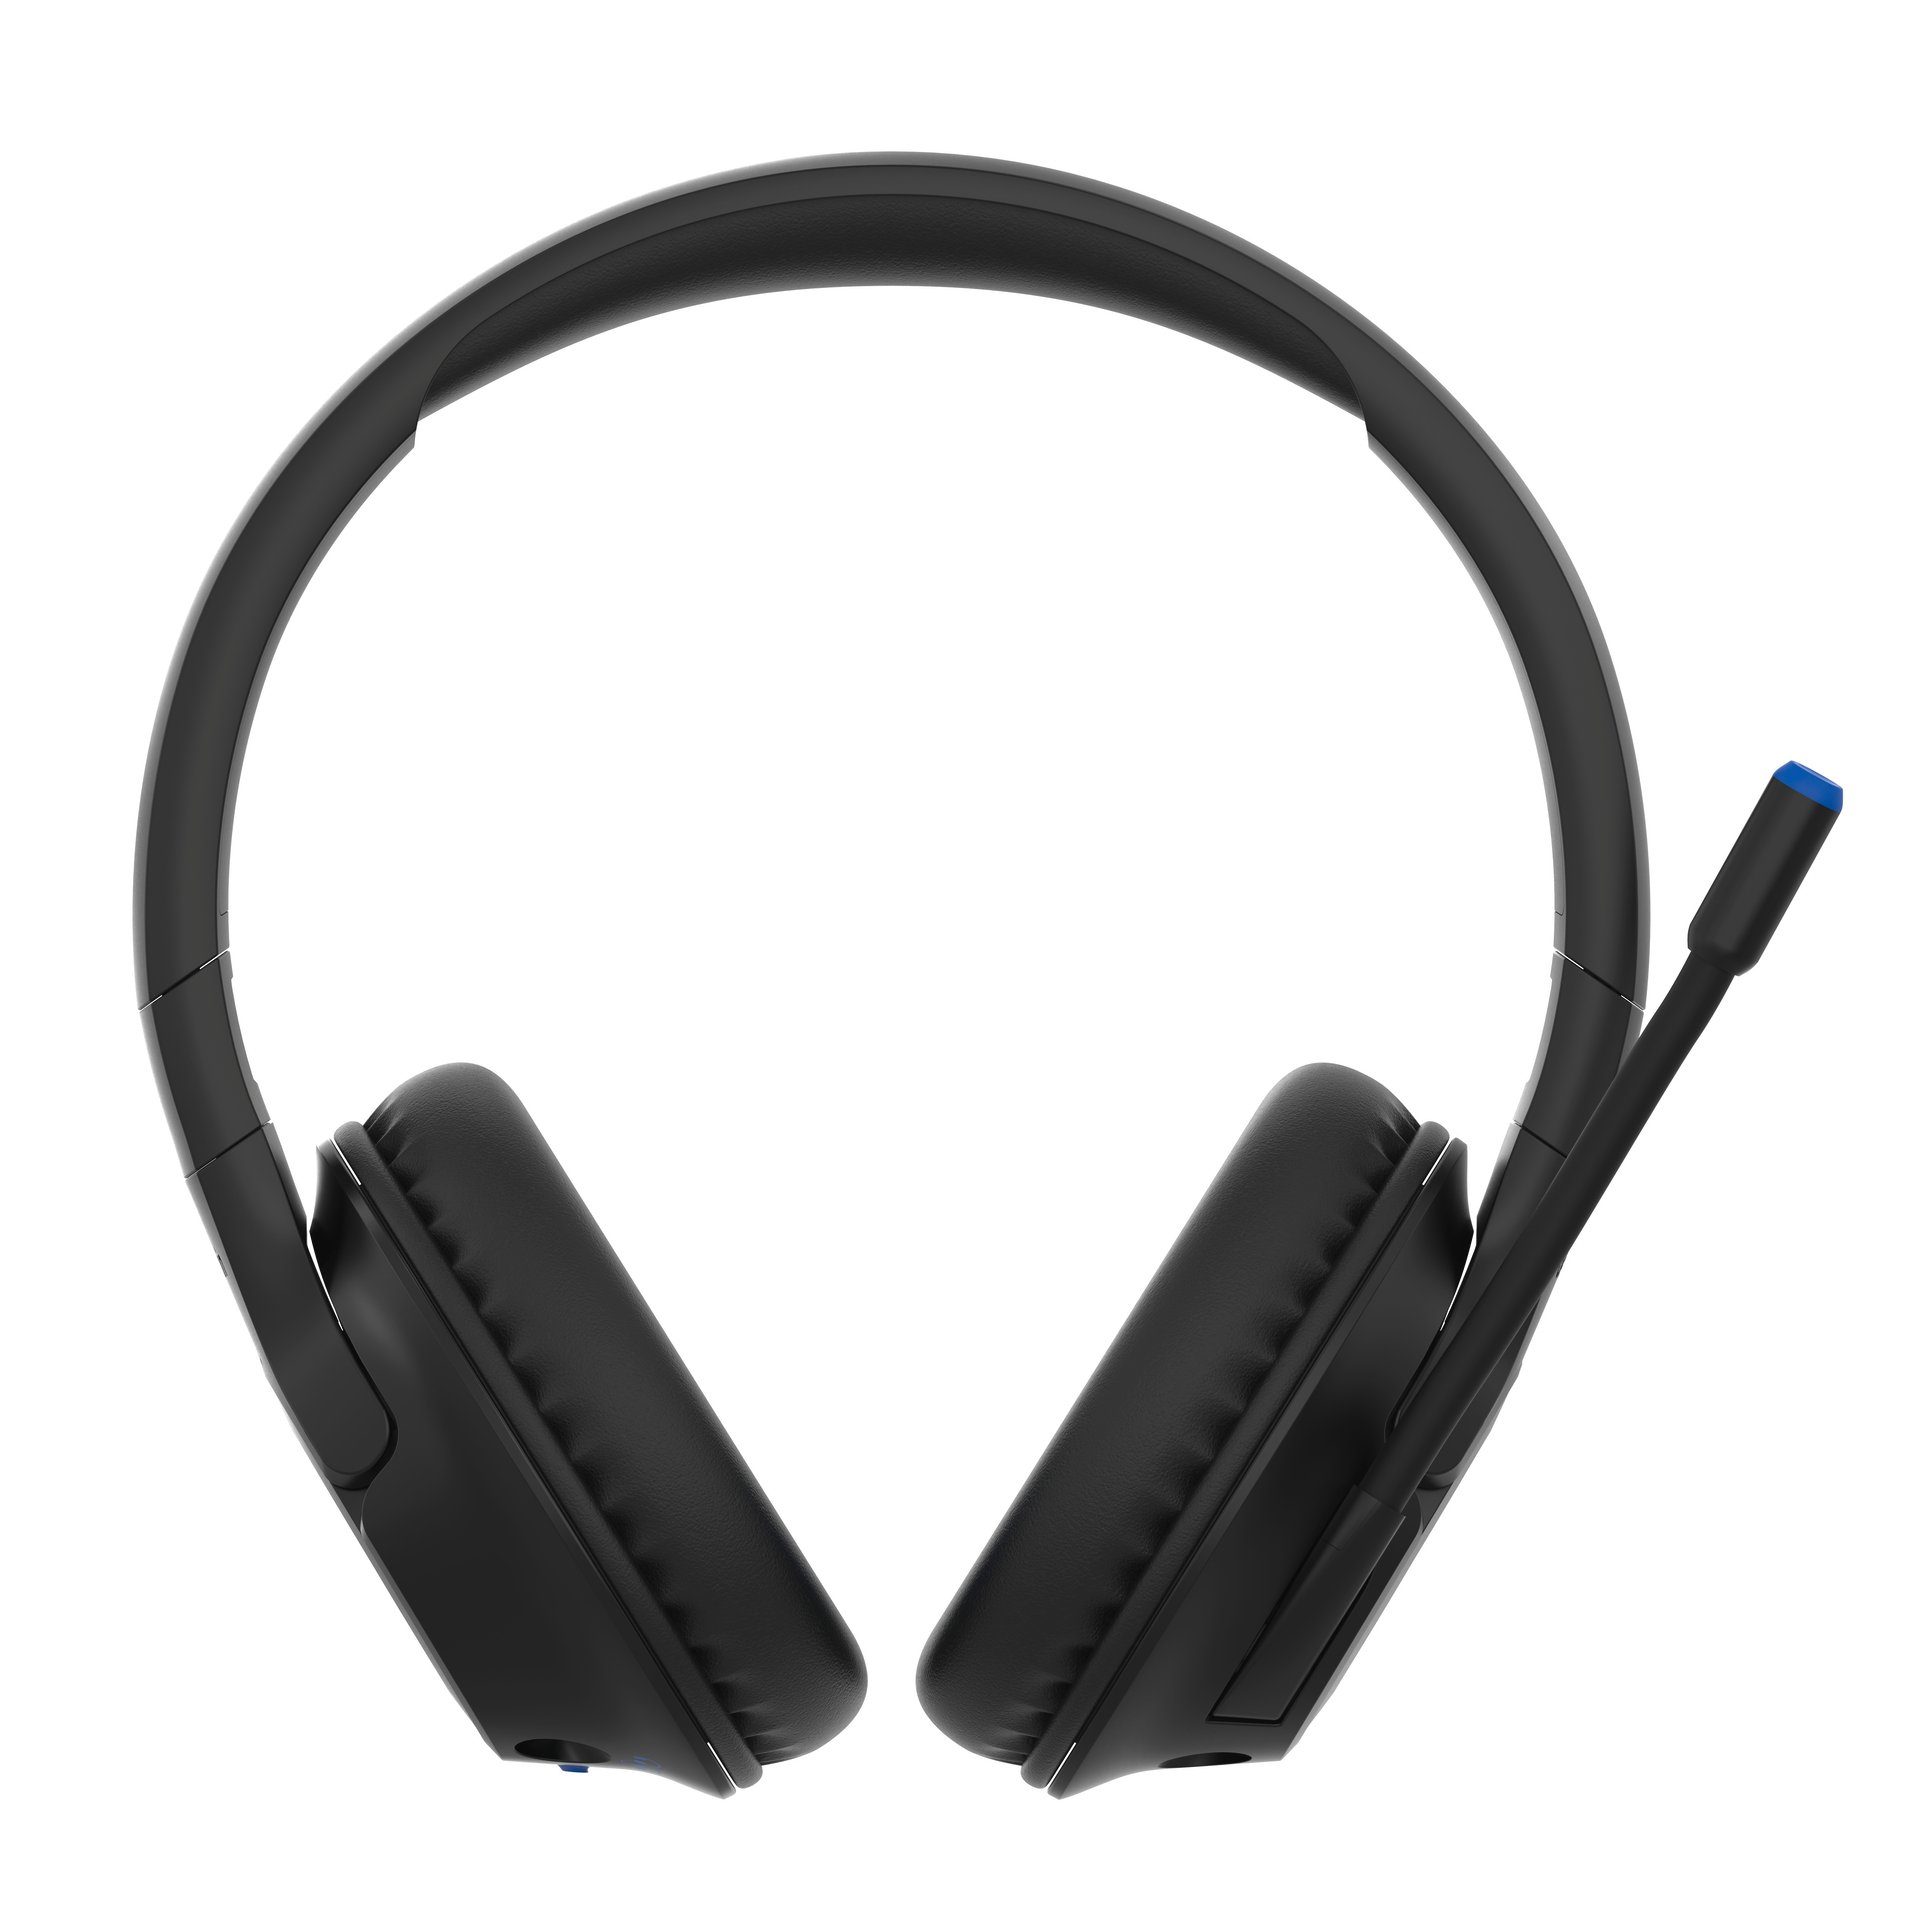 Belkin SOUNDFORM INSPIRE Over-Ear wireless BT Kinder-Kopfhörer Kopfhörer (Stummschaltung) Schwarz